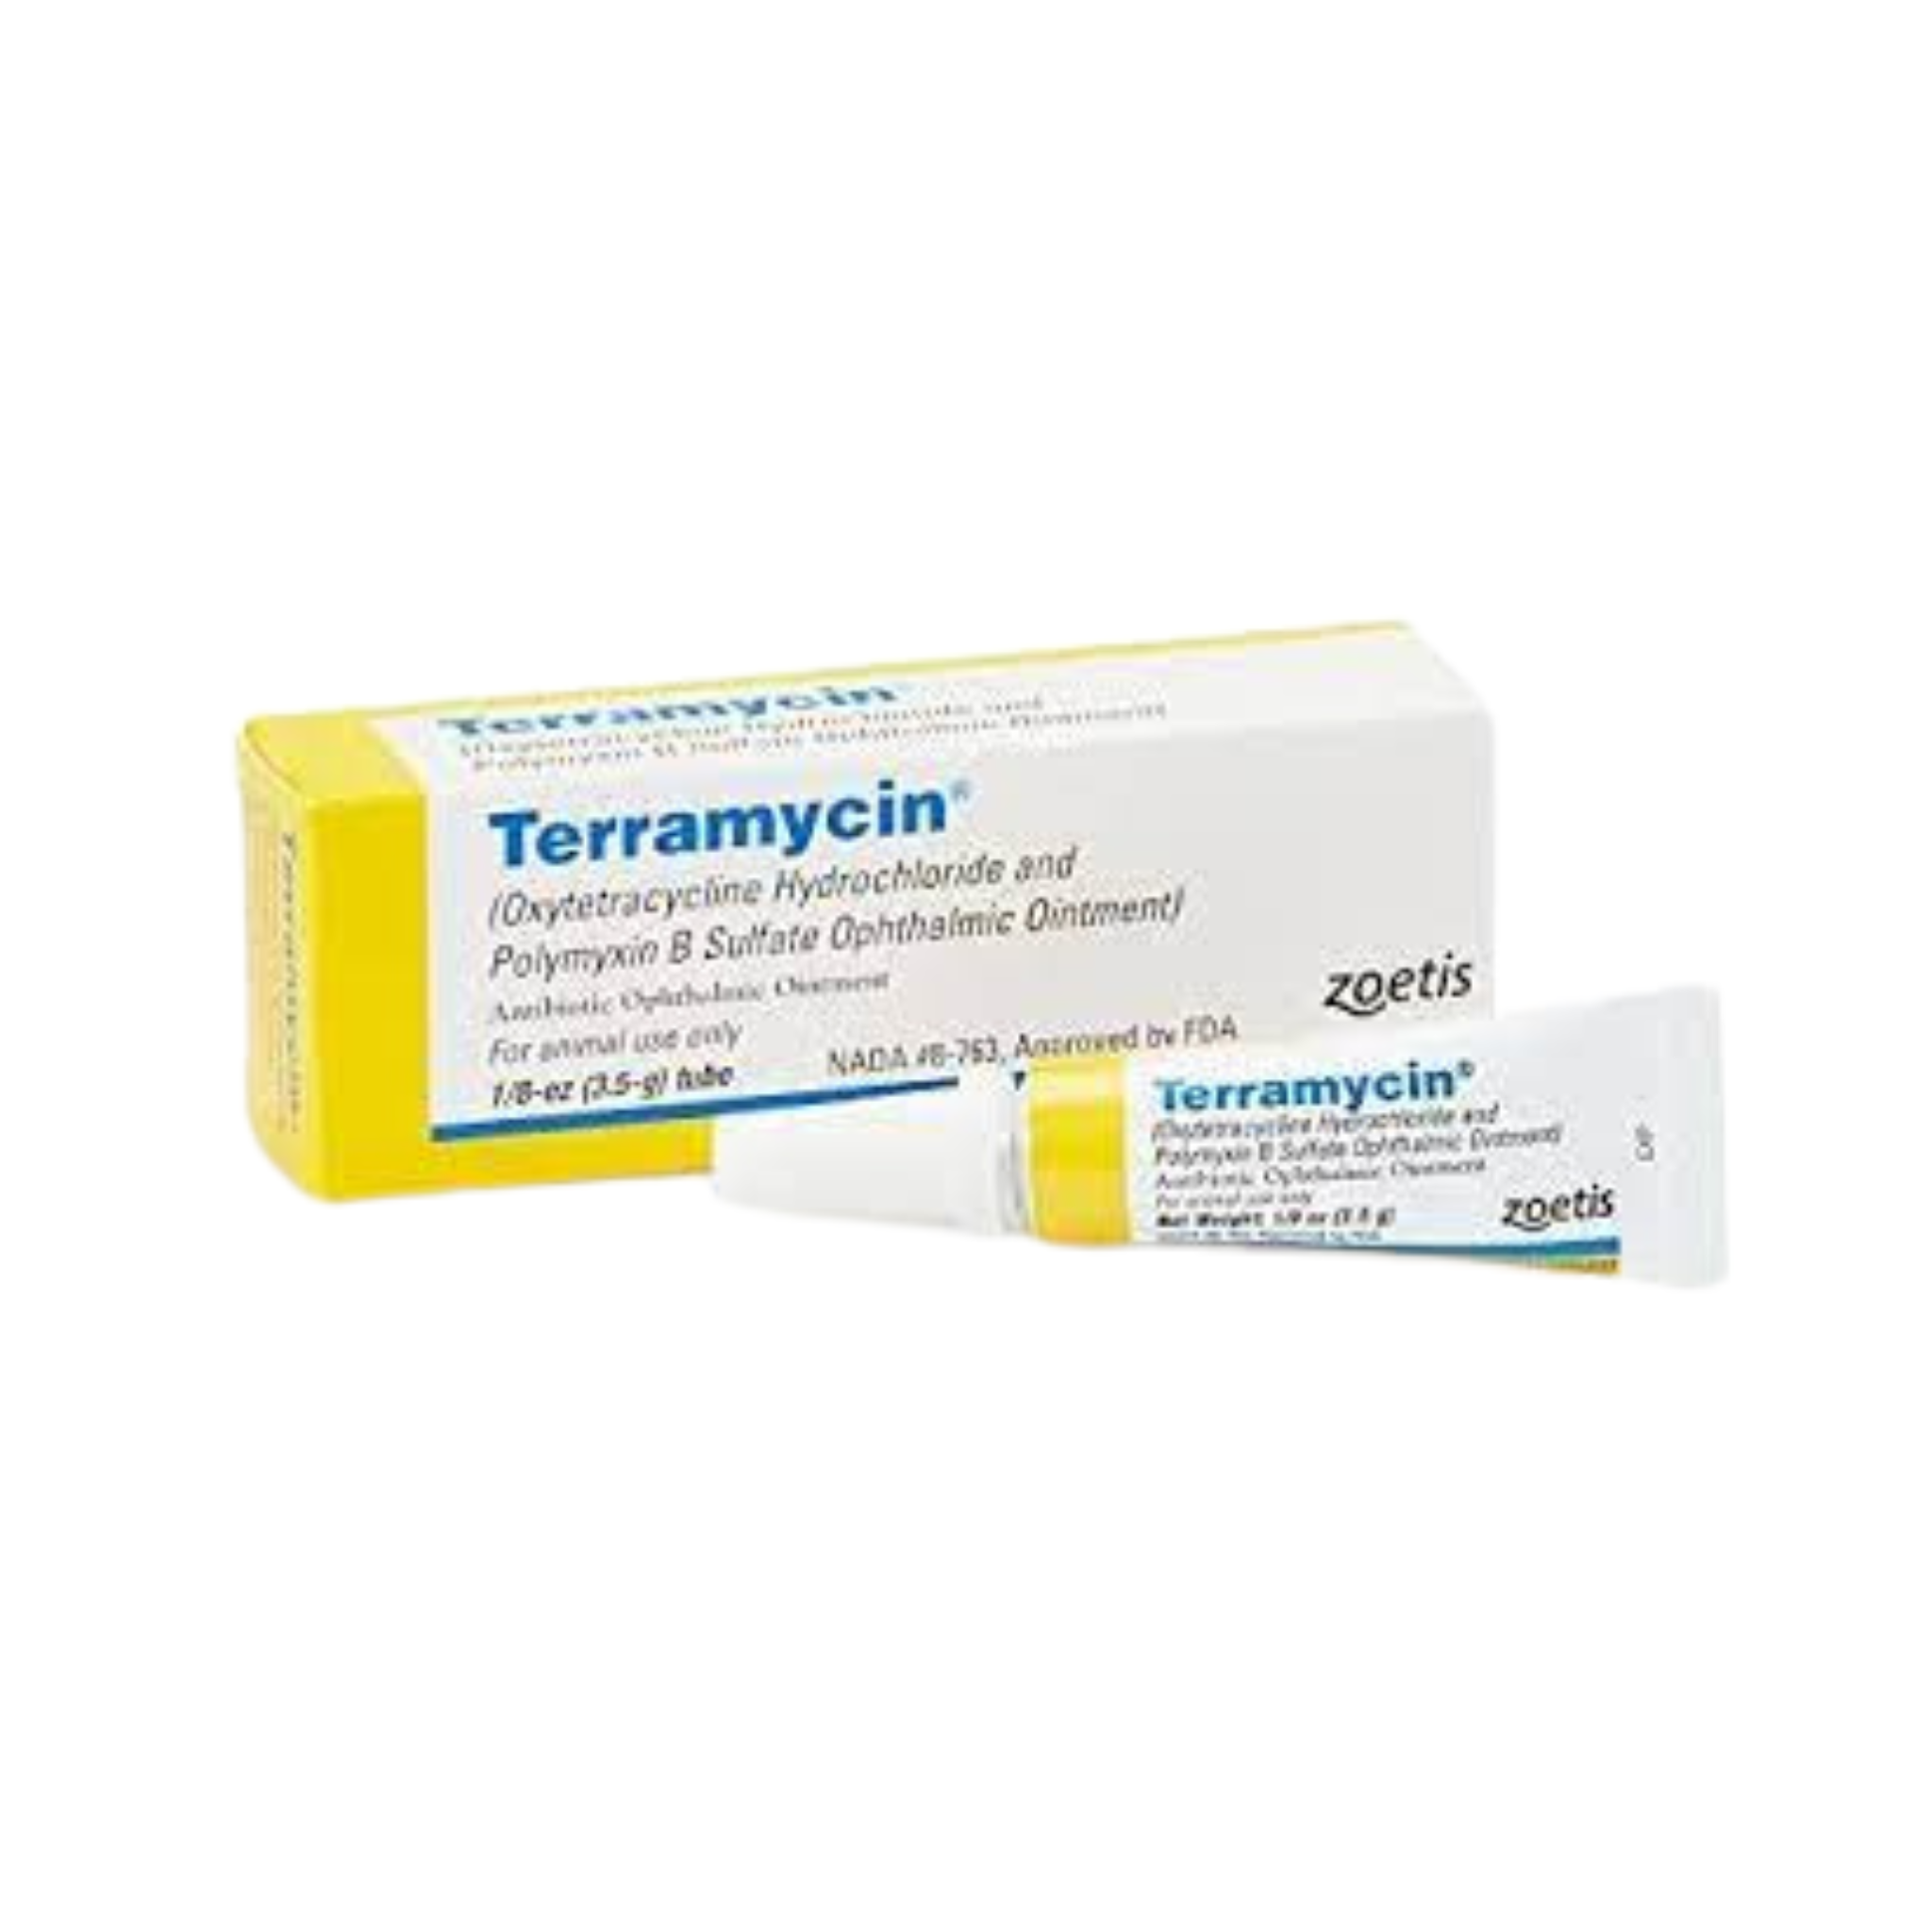 Terramycin Antibiotic Ophthalmic Ointment